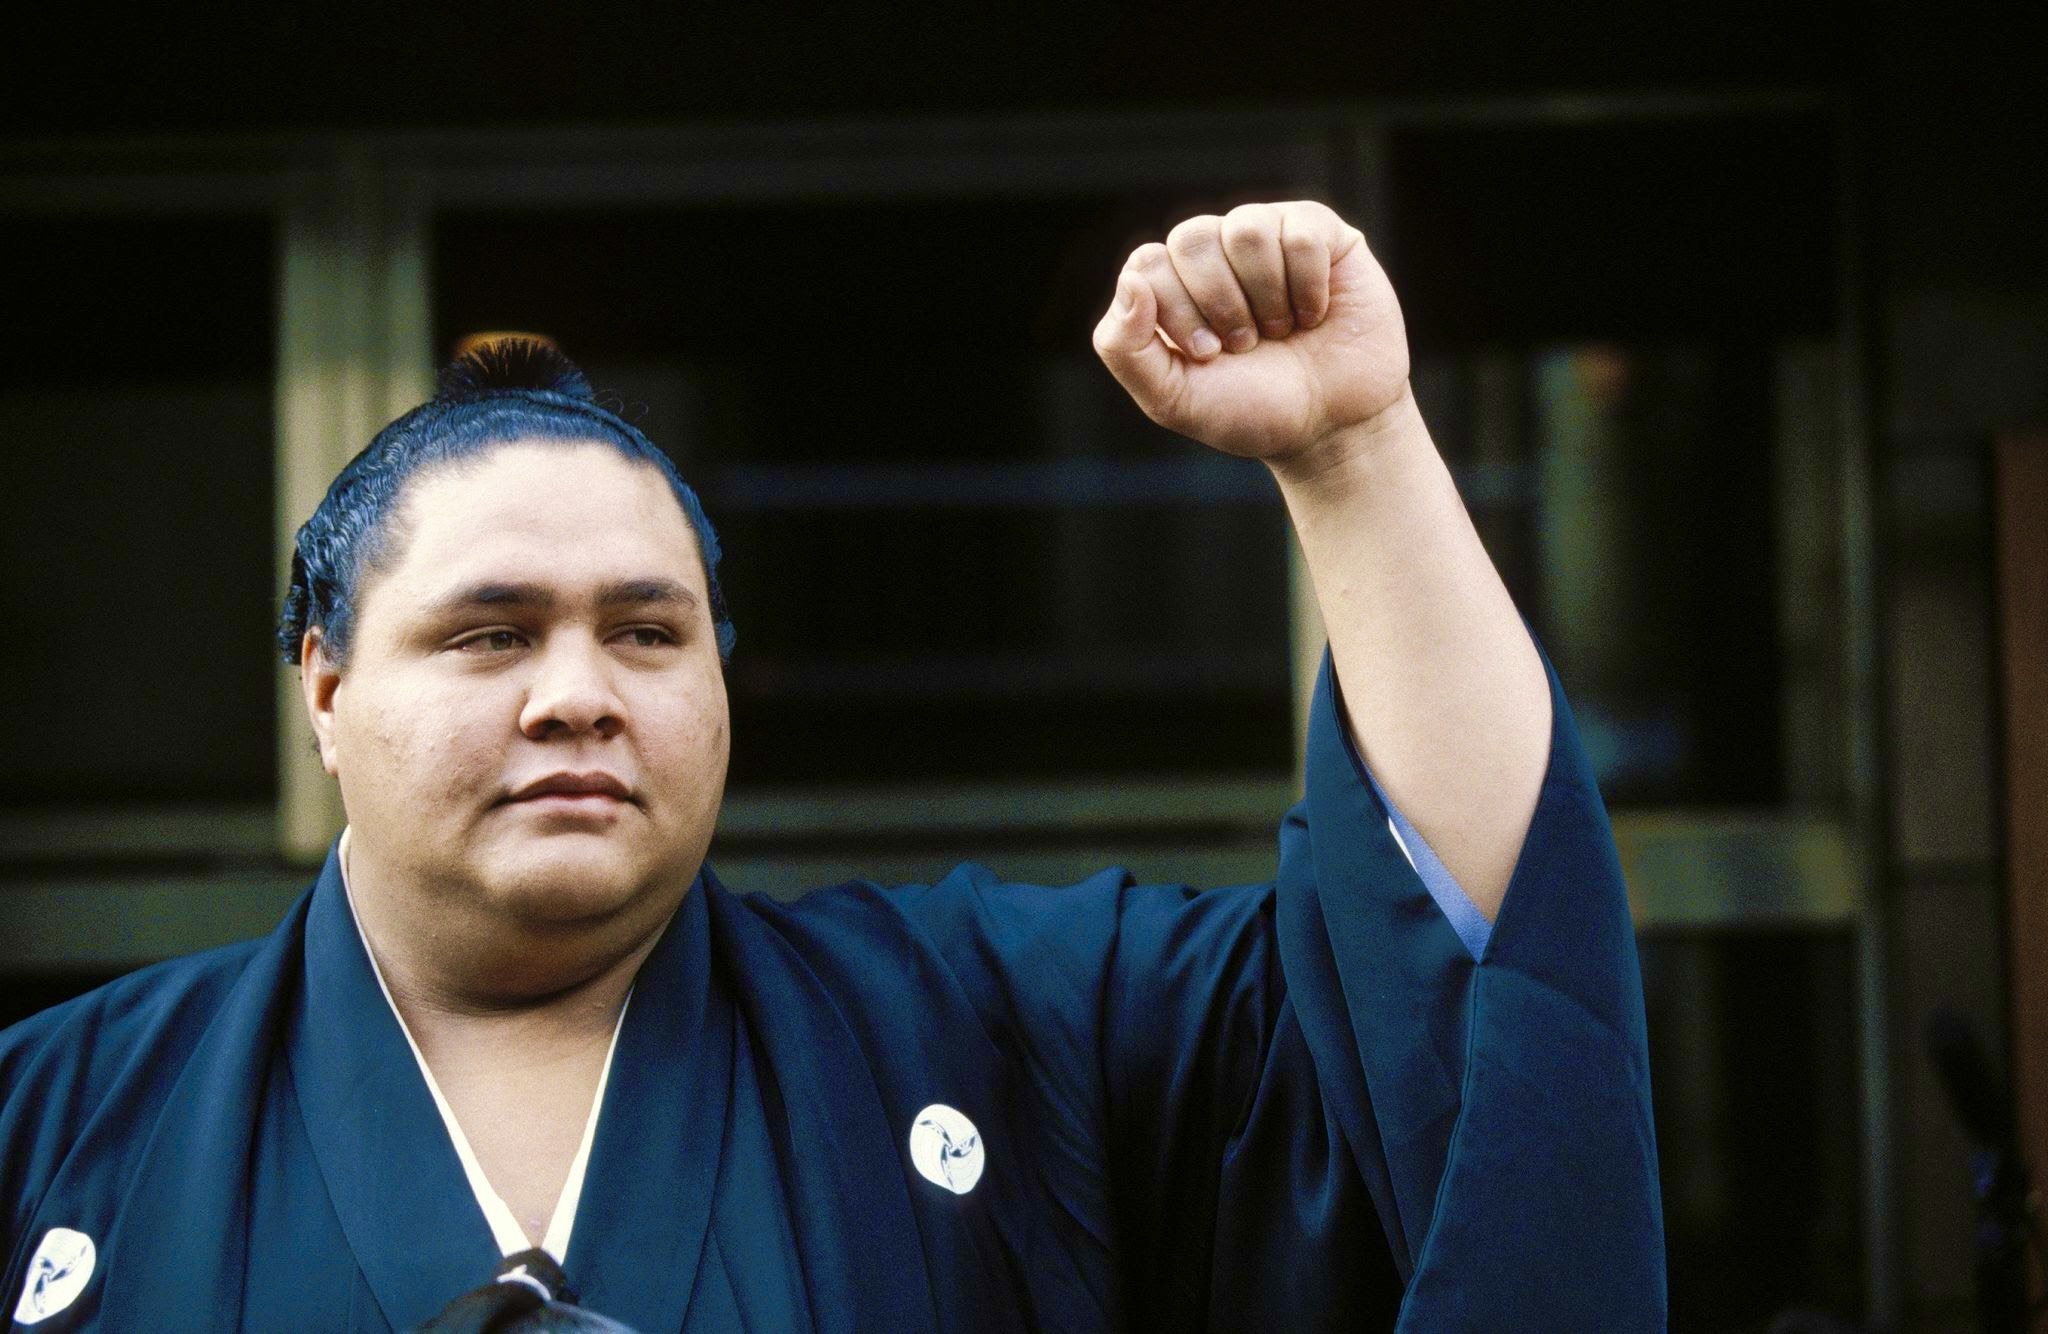 Akebono Taro, Sumo Legend and WrestleMania 21 Competitor, Dies at Age 54